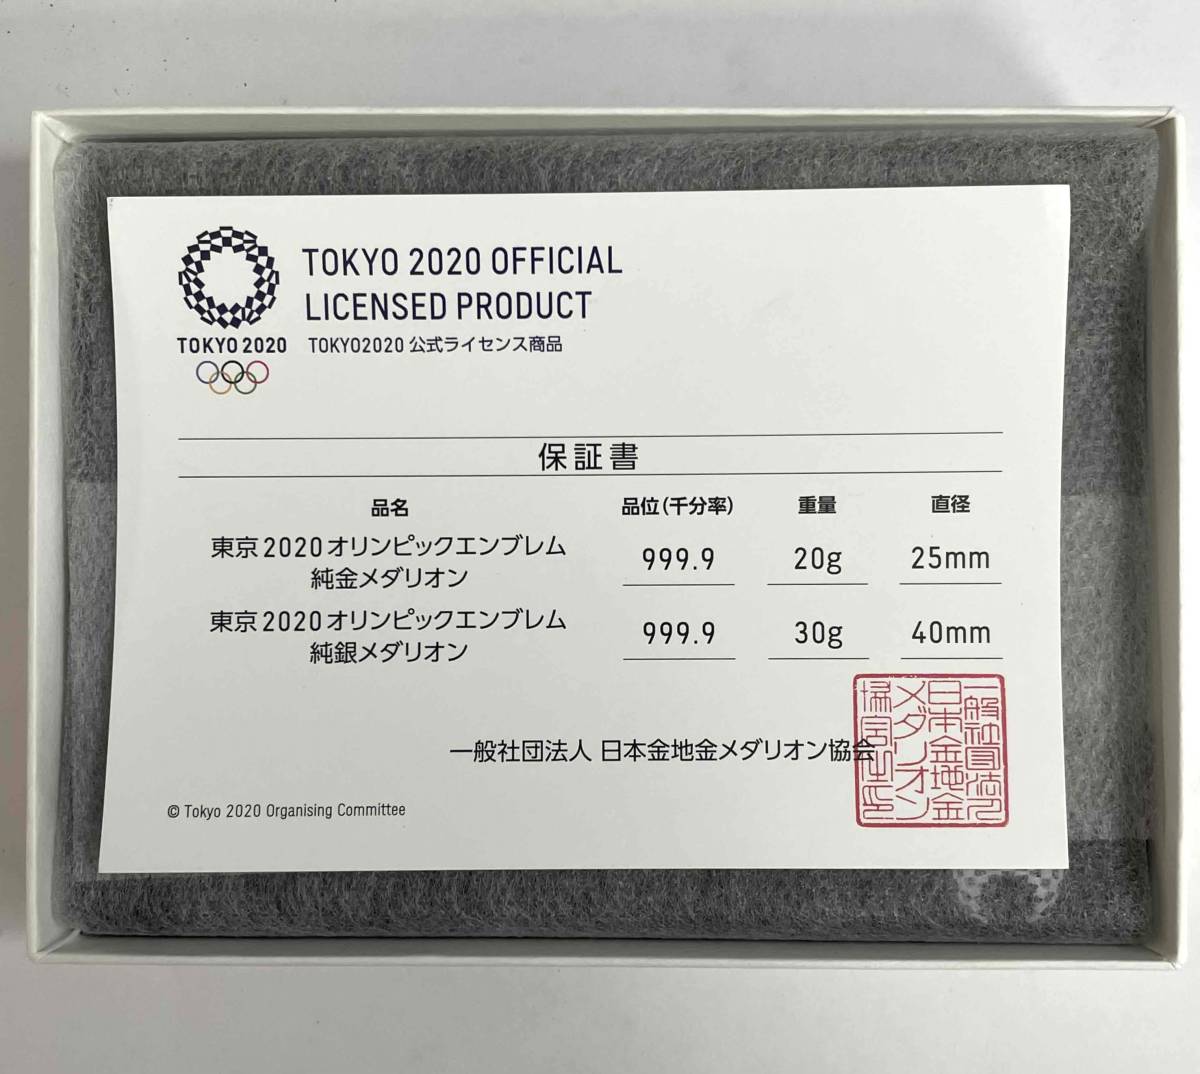 HX-15 東京オリンピック2020 純金純銀メダリオンセット 純金20g純銀30g TOKYO2020公式ライセンス商品 保証書付き 金貨 銀貨 の画像3